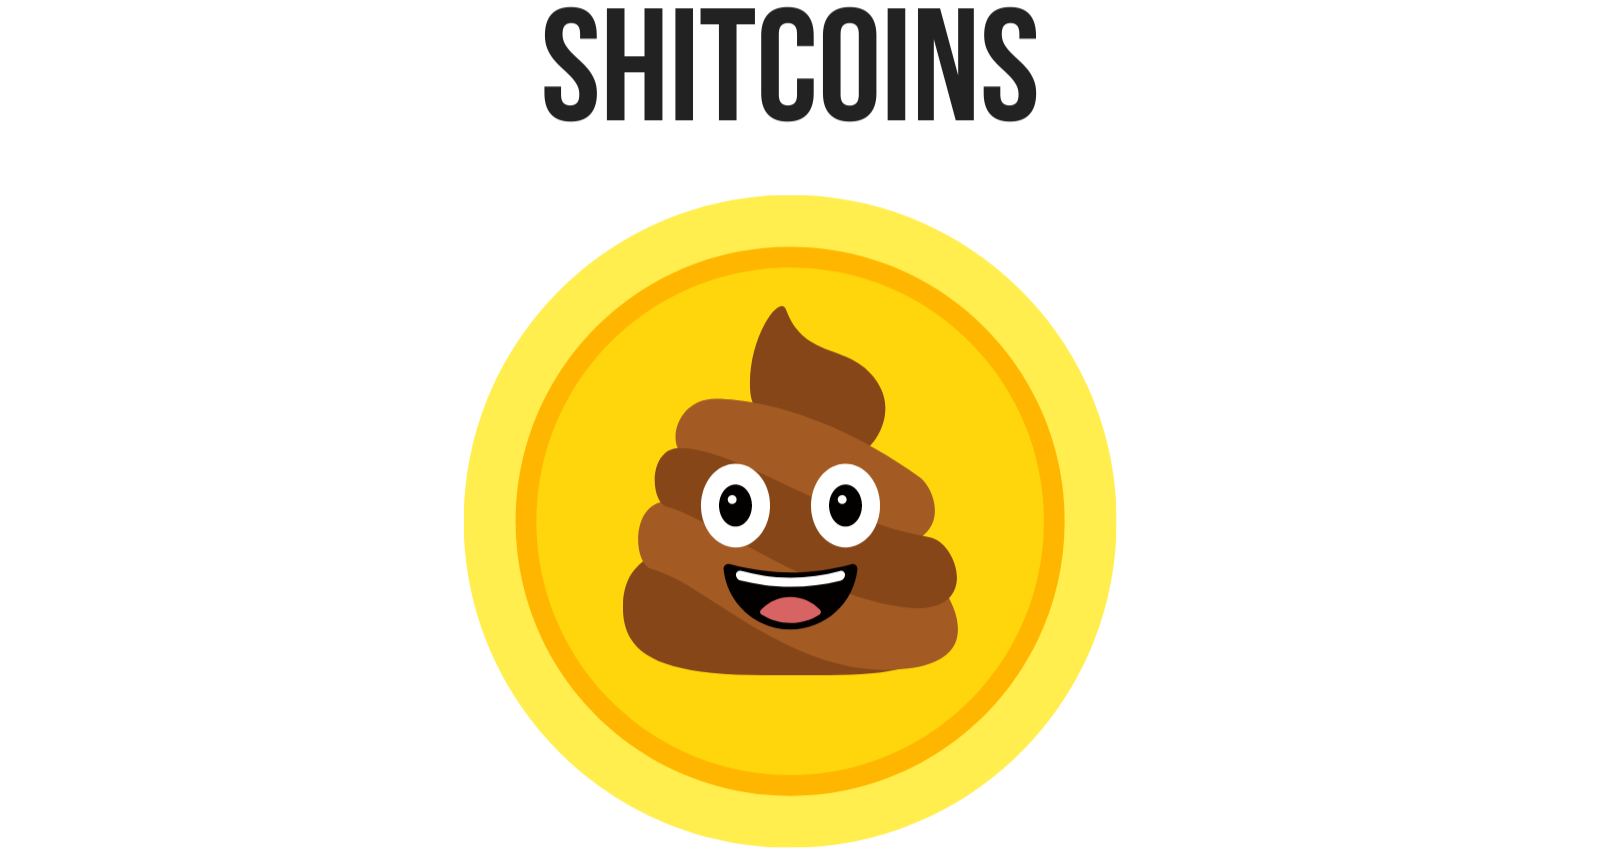 Shitcoins